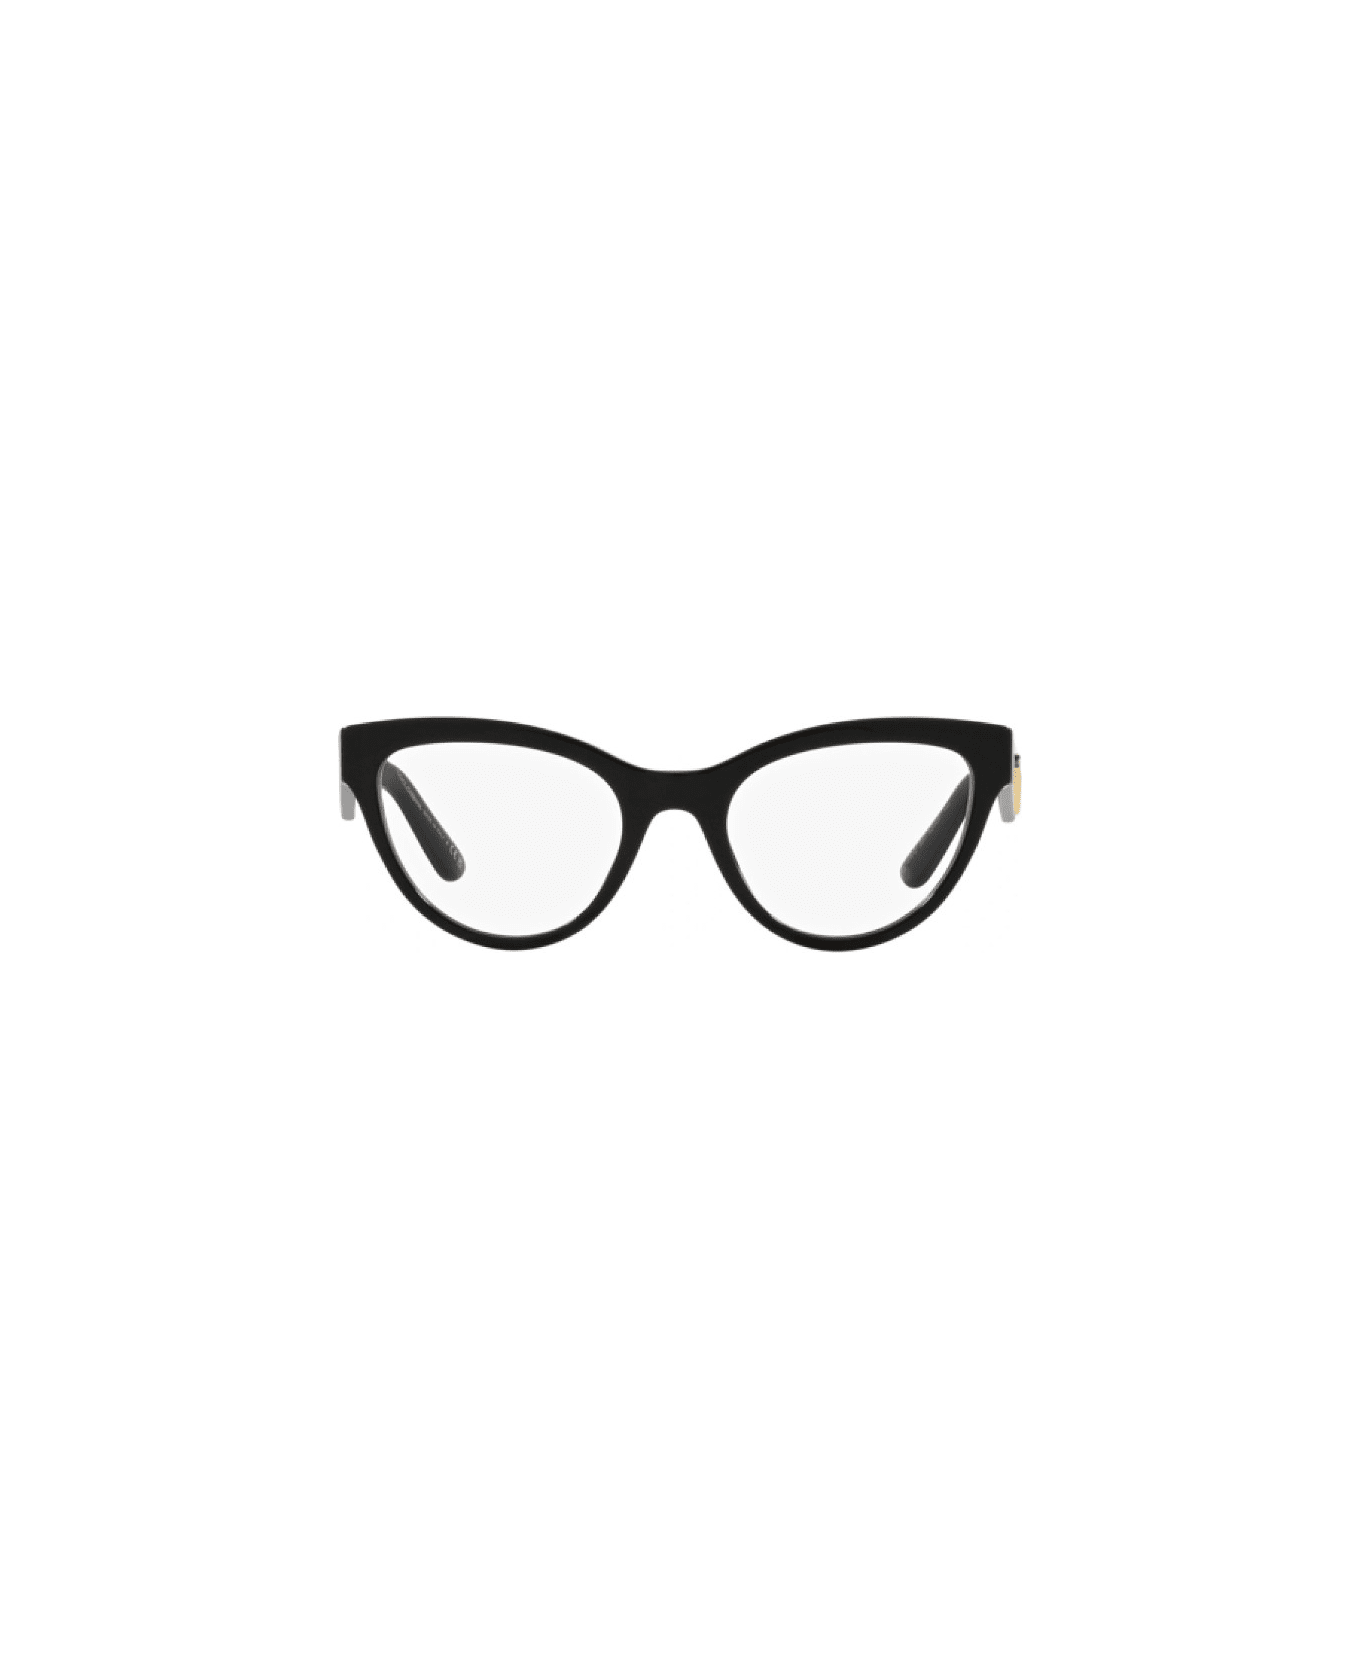 Dolce & Gabbana Eyewear DG3372 501 Glasses - Nero アイウェア